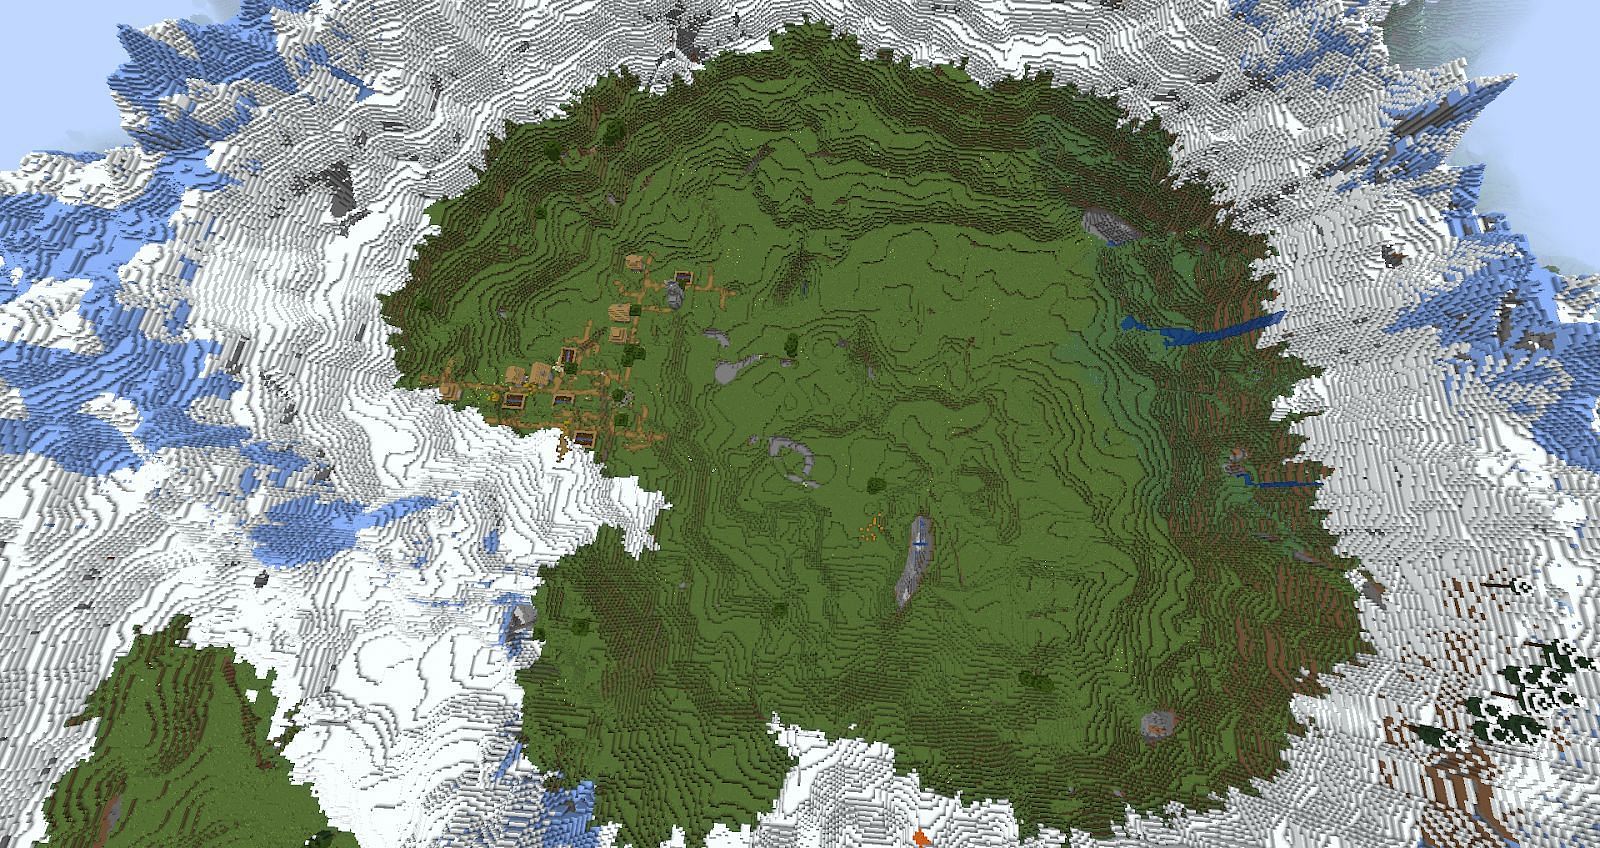 Glitched valley Minecraft 1.18 seed (Image via Minecraft)